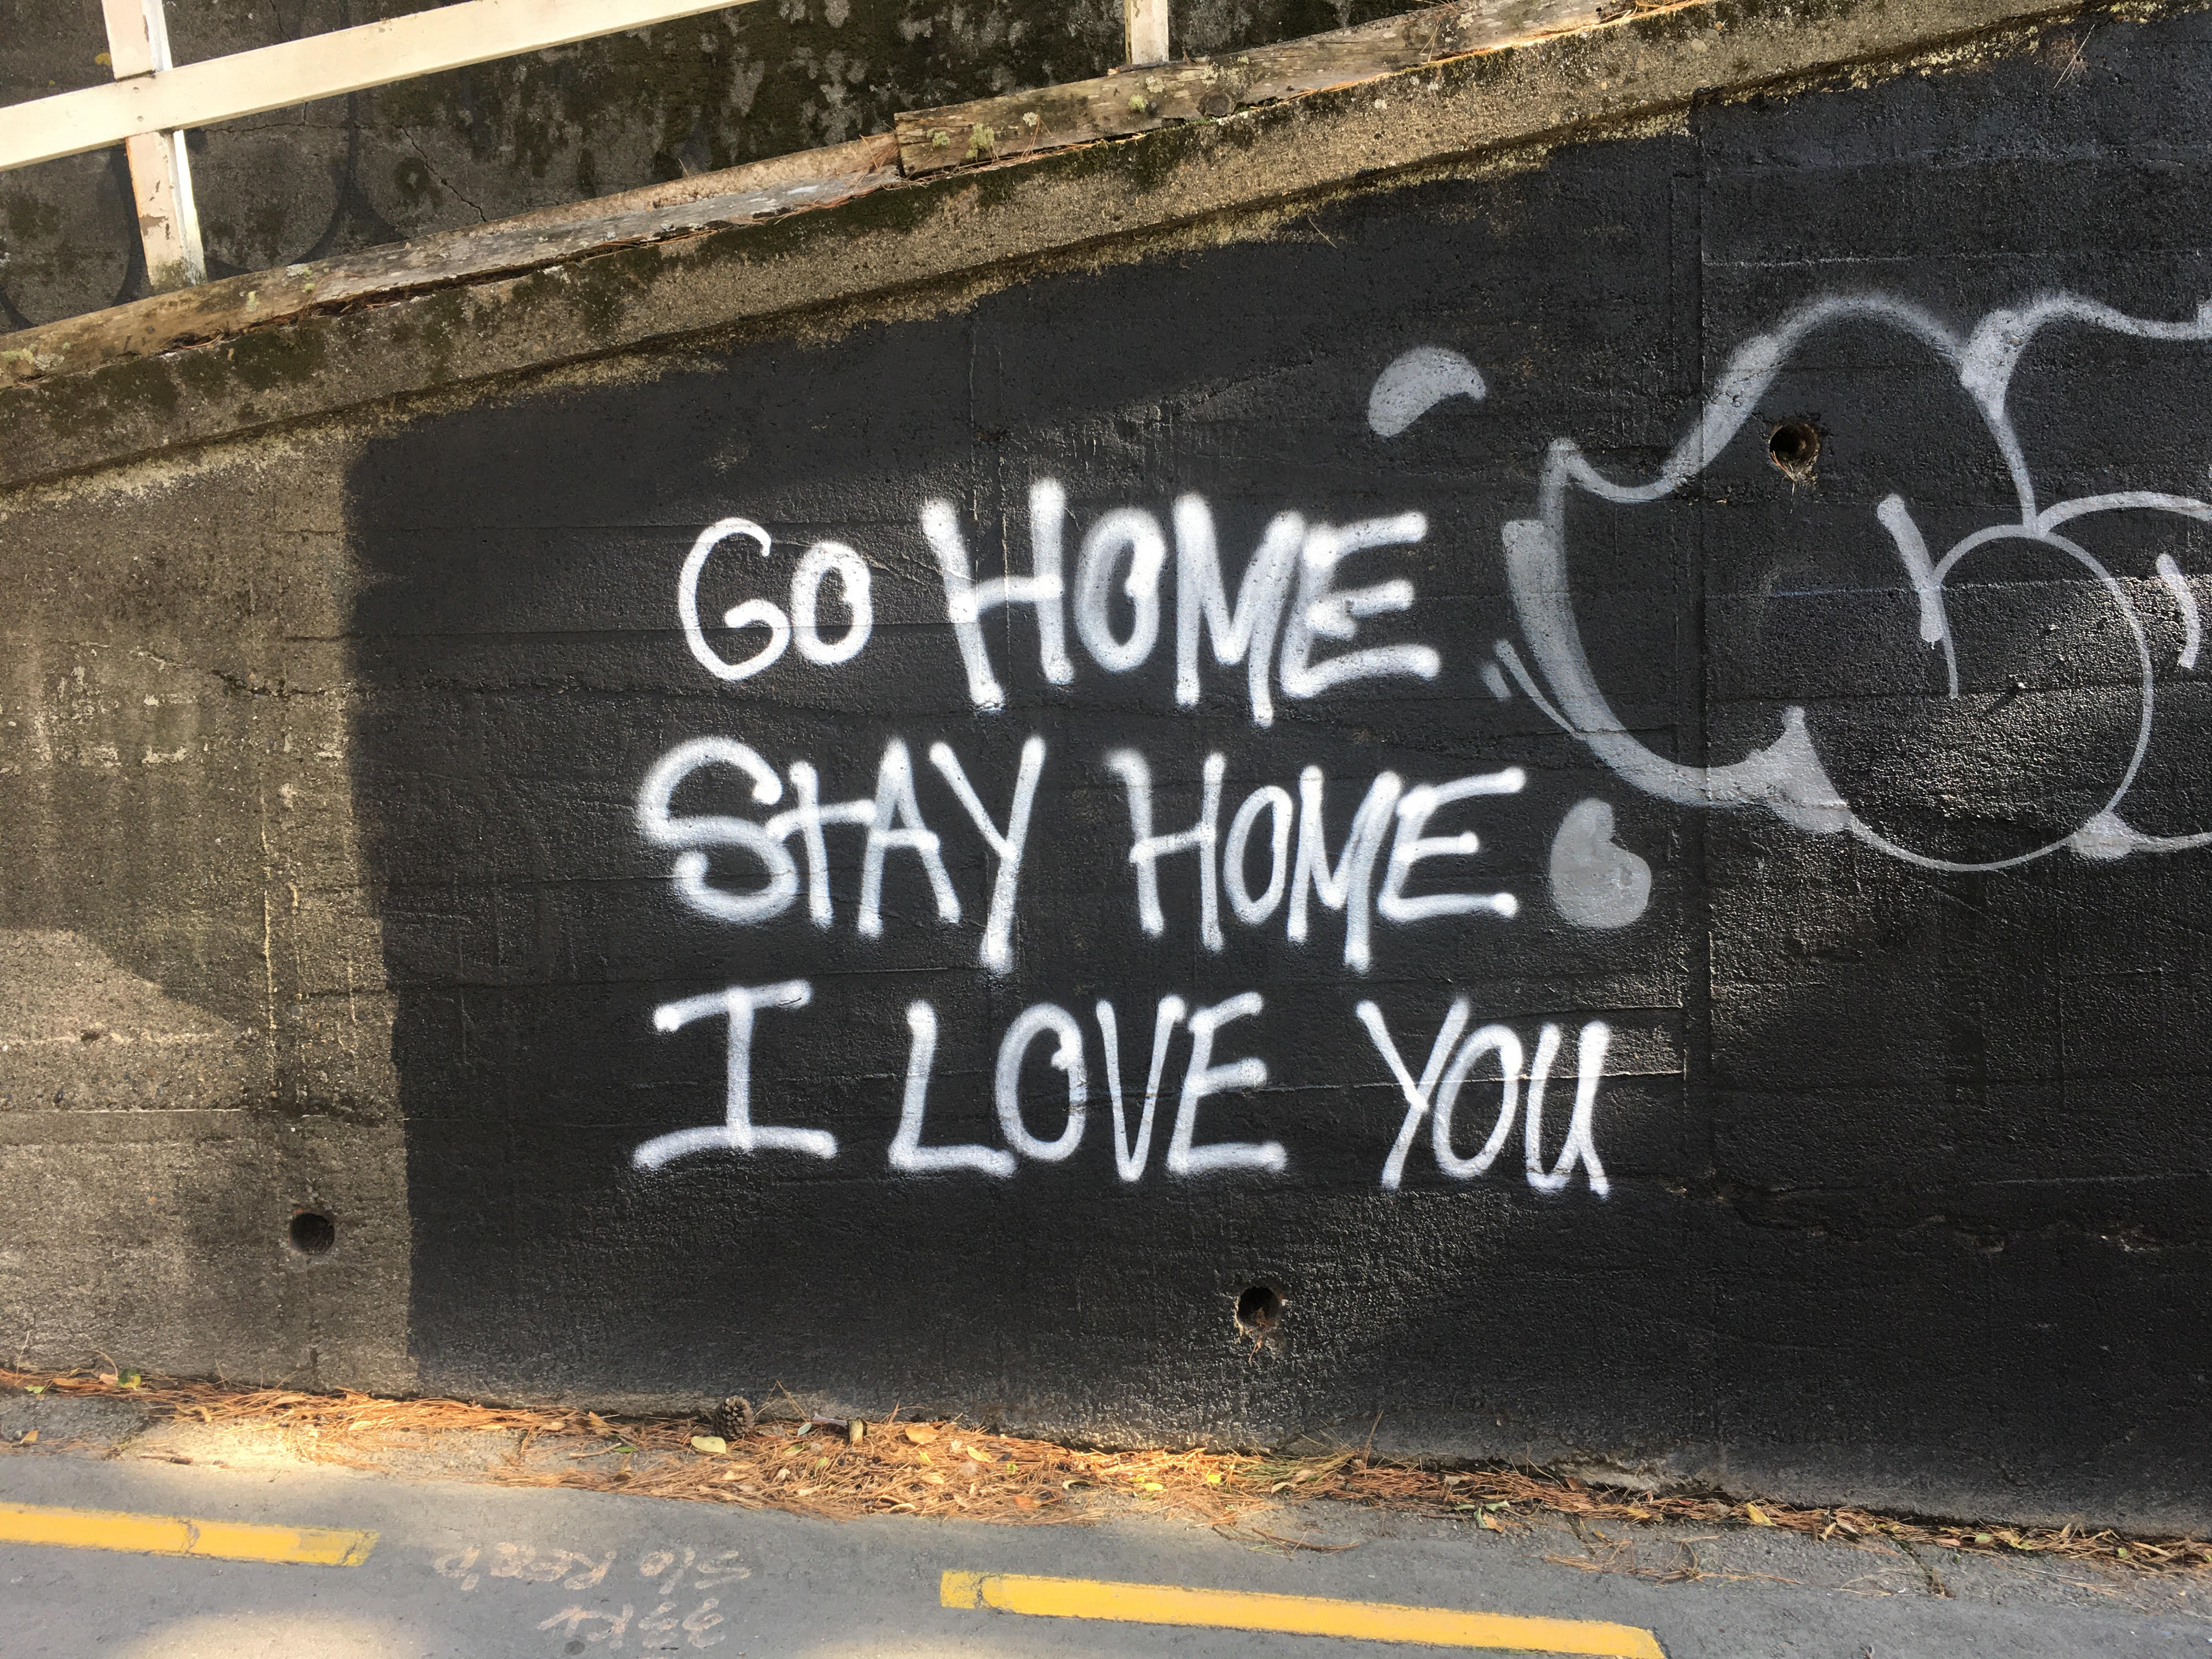 2020 Go home stay home graffiti